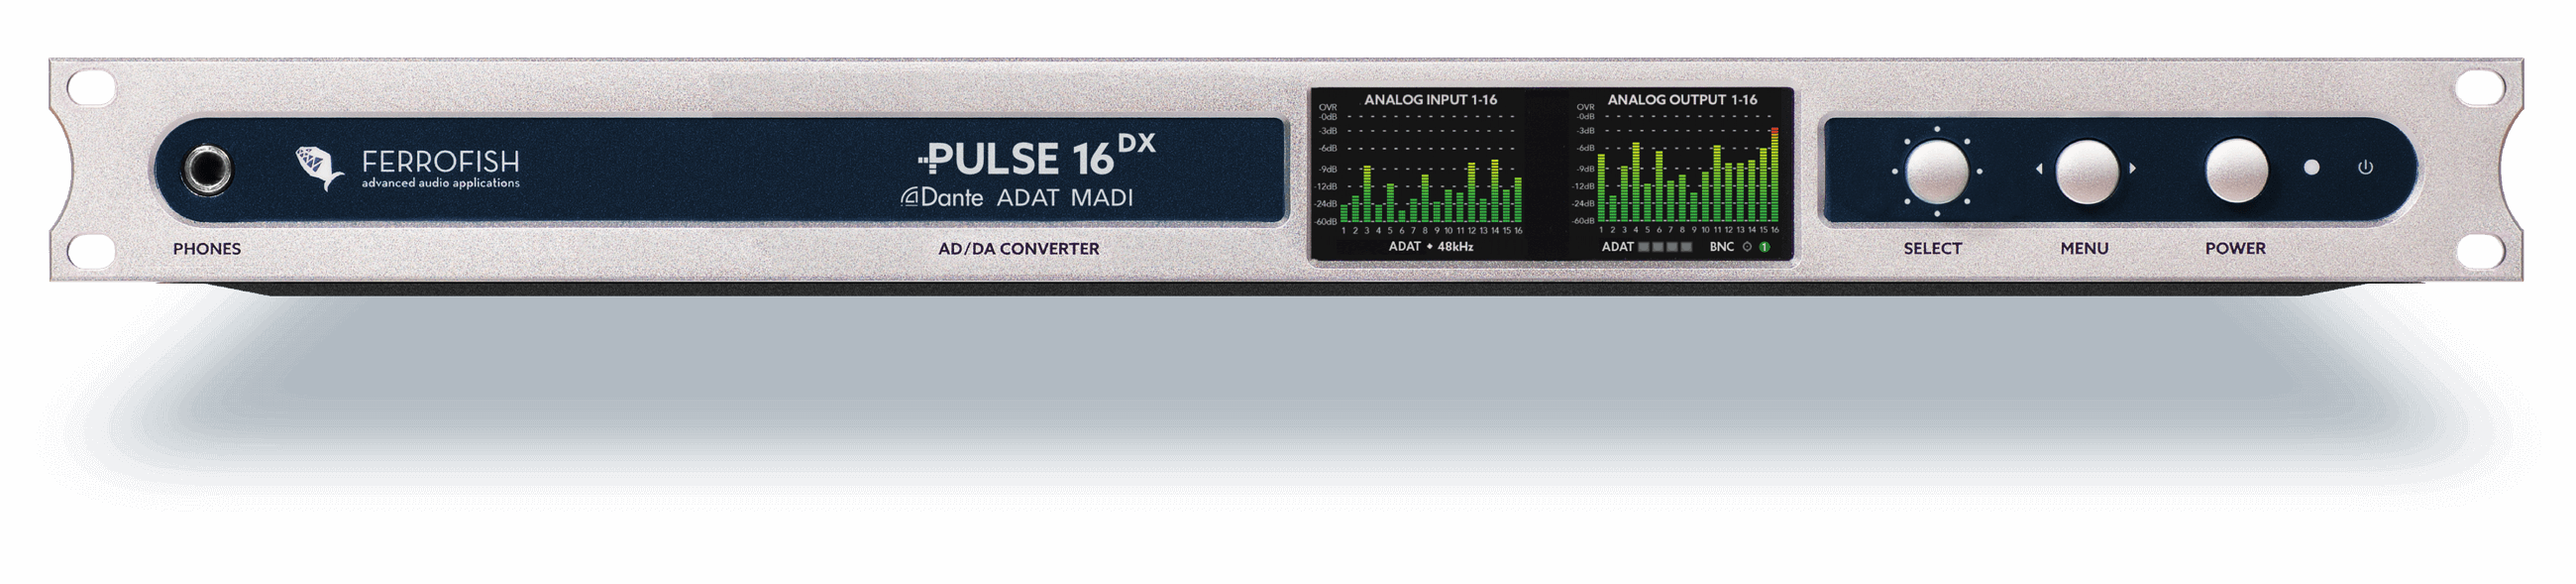 Ferrofish Pulse 16 DX +24dBu - Same as Pulse 16 DX, with analog I/O modified for +24dBu level compatibility